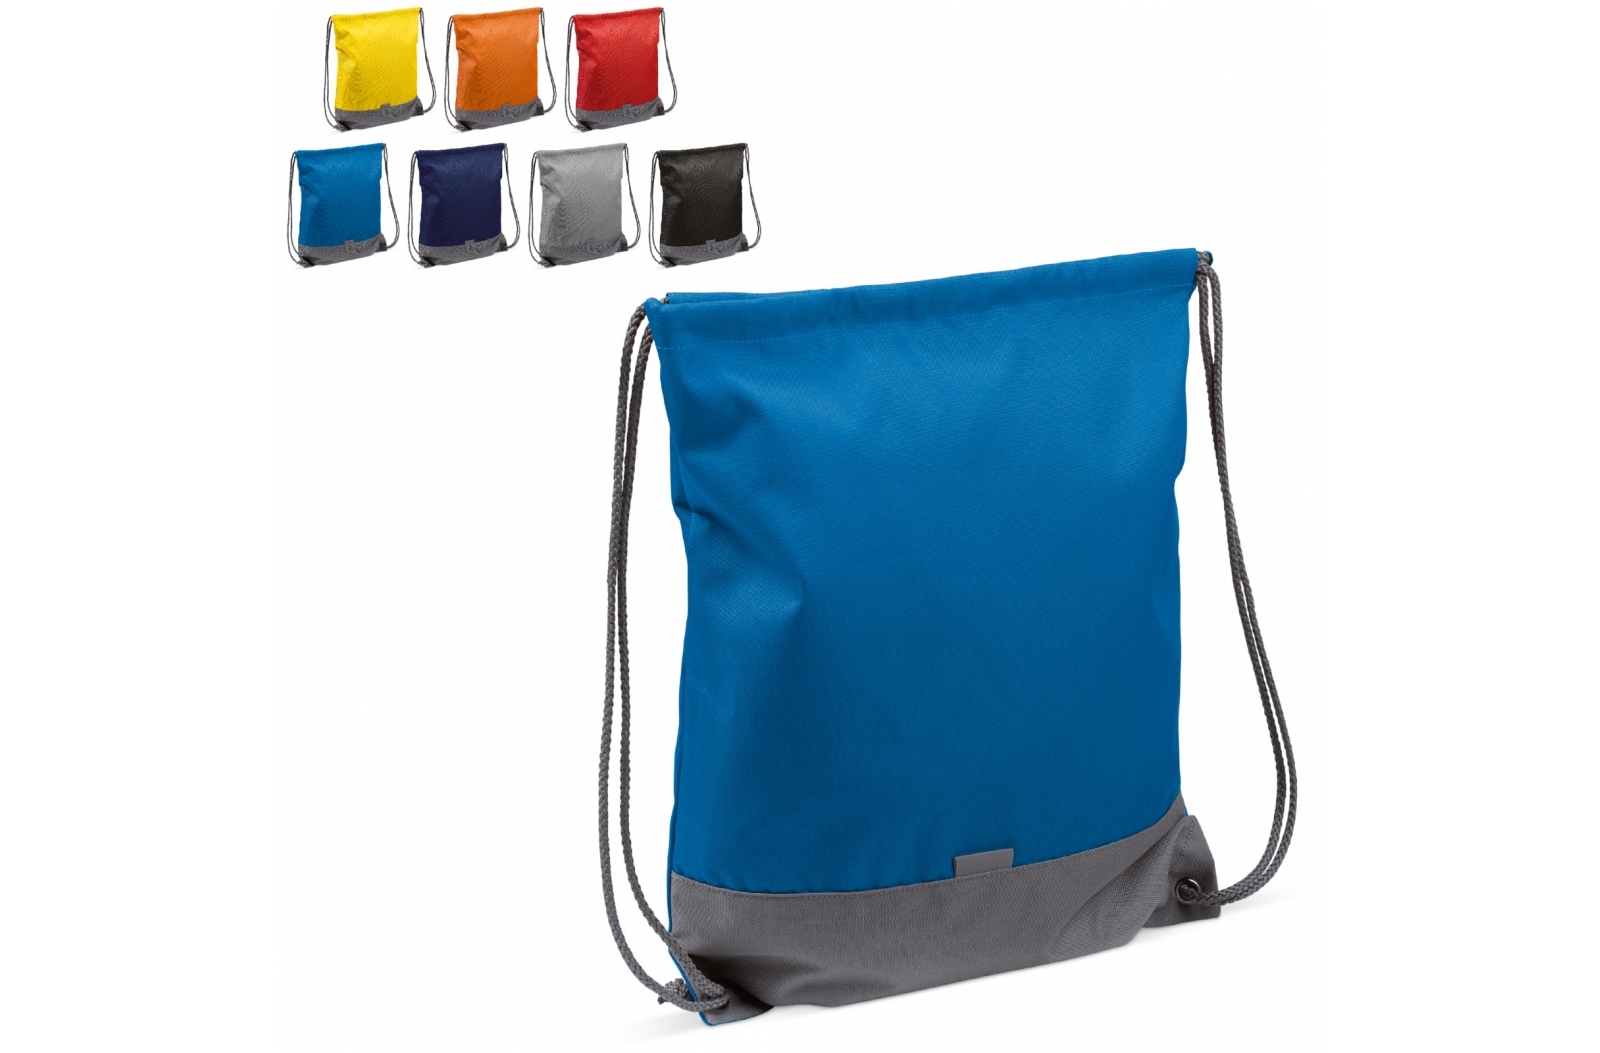 Practical Drawstring Backpack - Southampton